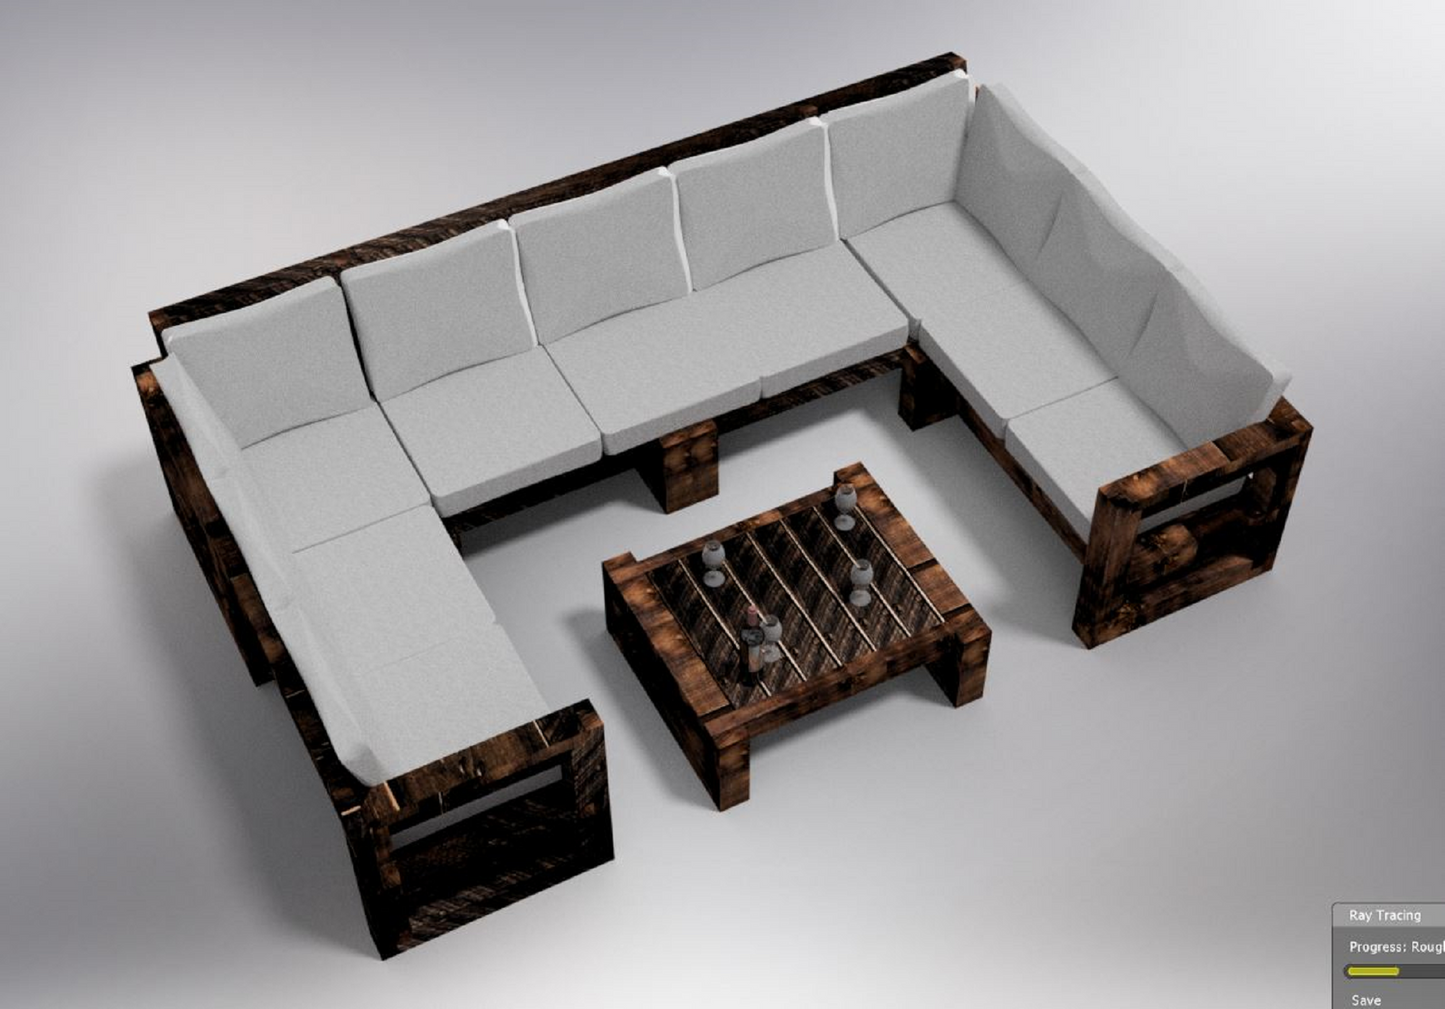 Solid Wood Garden Sofa Patio set Extra Large